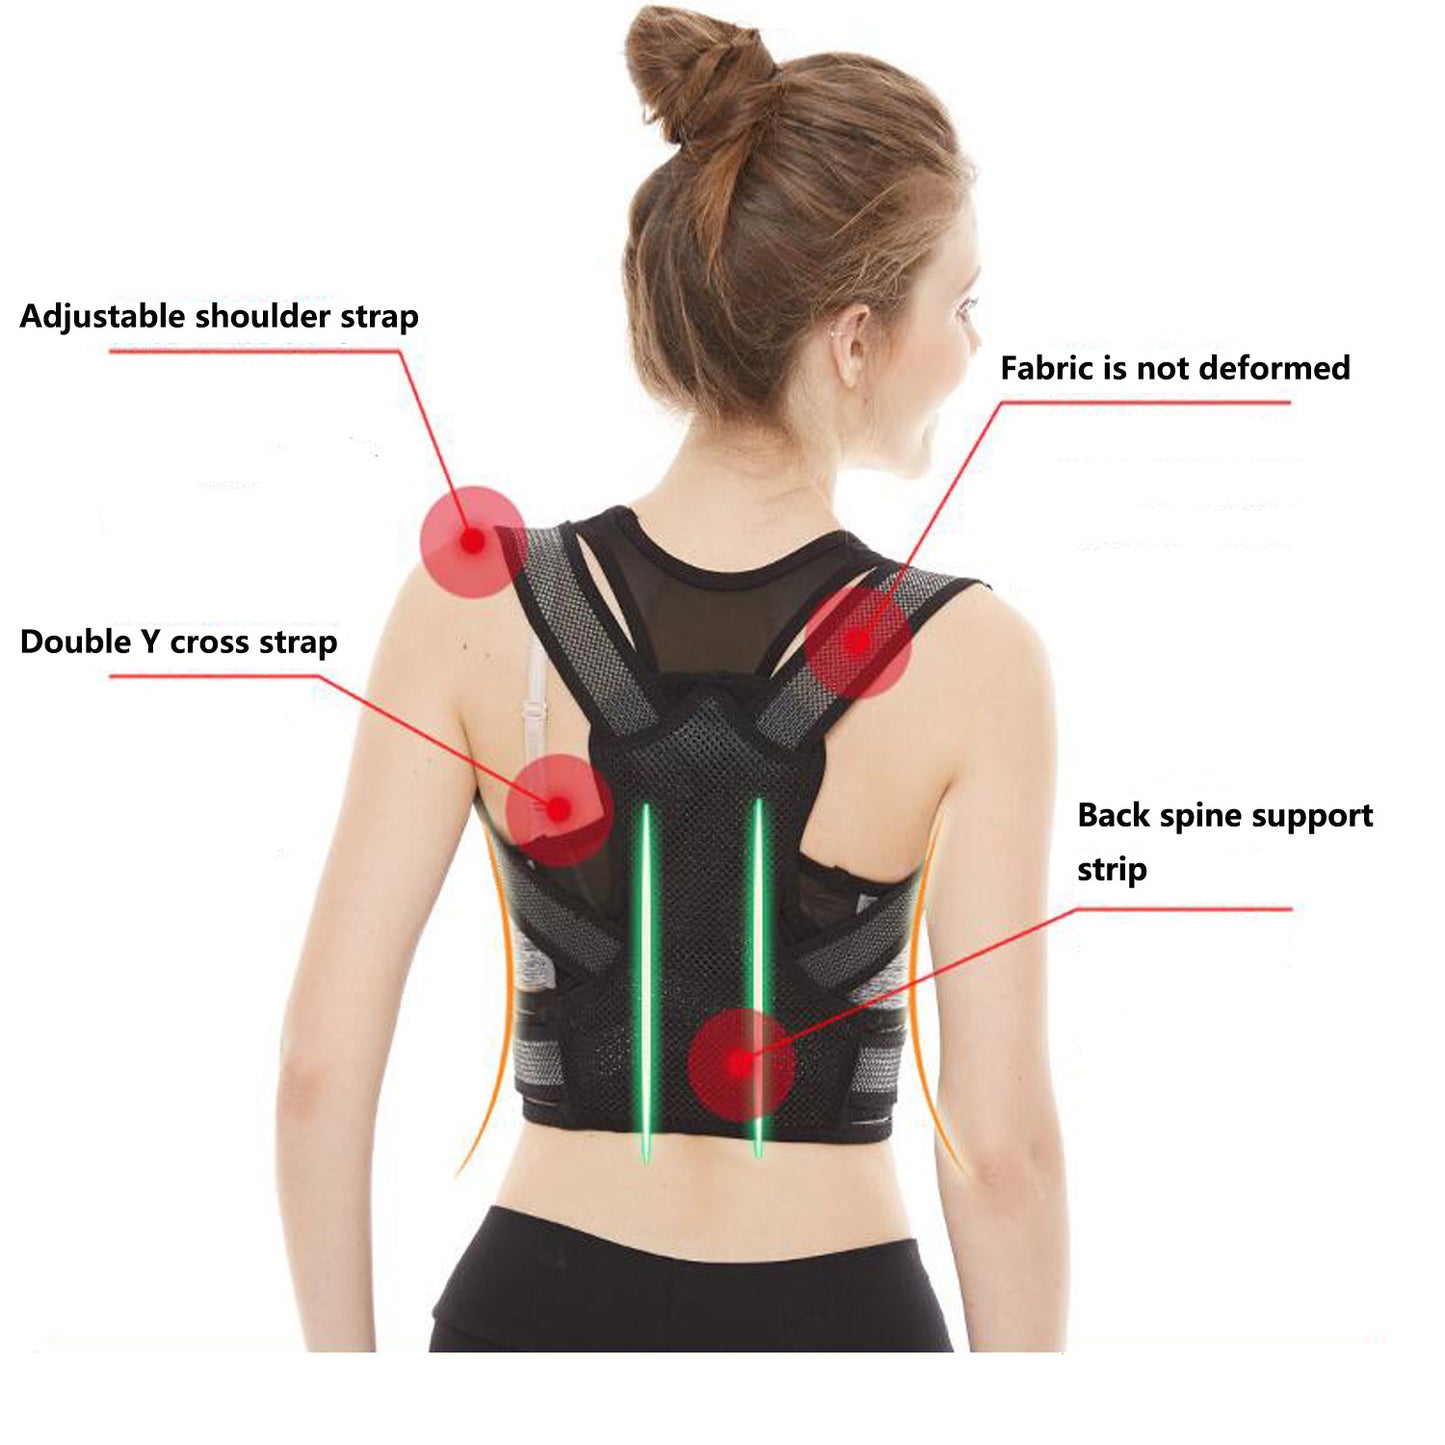 ZSZBACE Back brace, Scoliosis Humpback Correction Belt, Adjustable